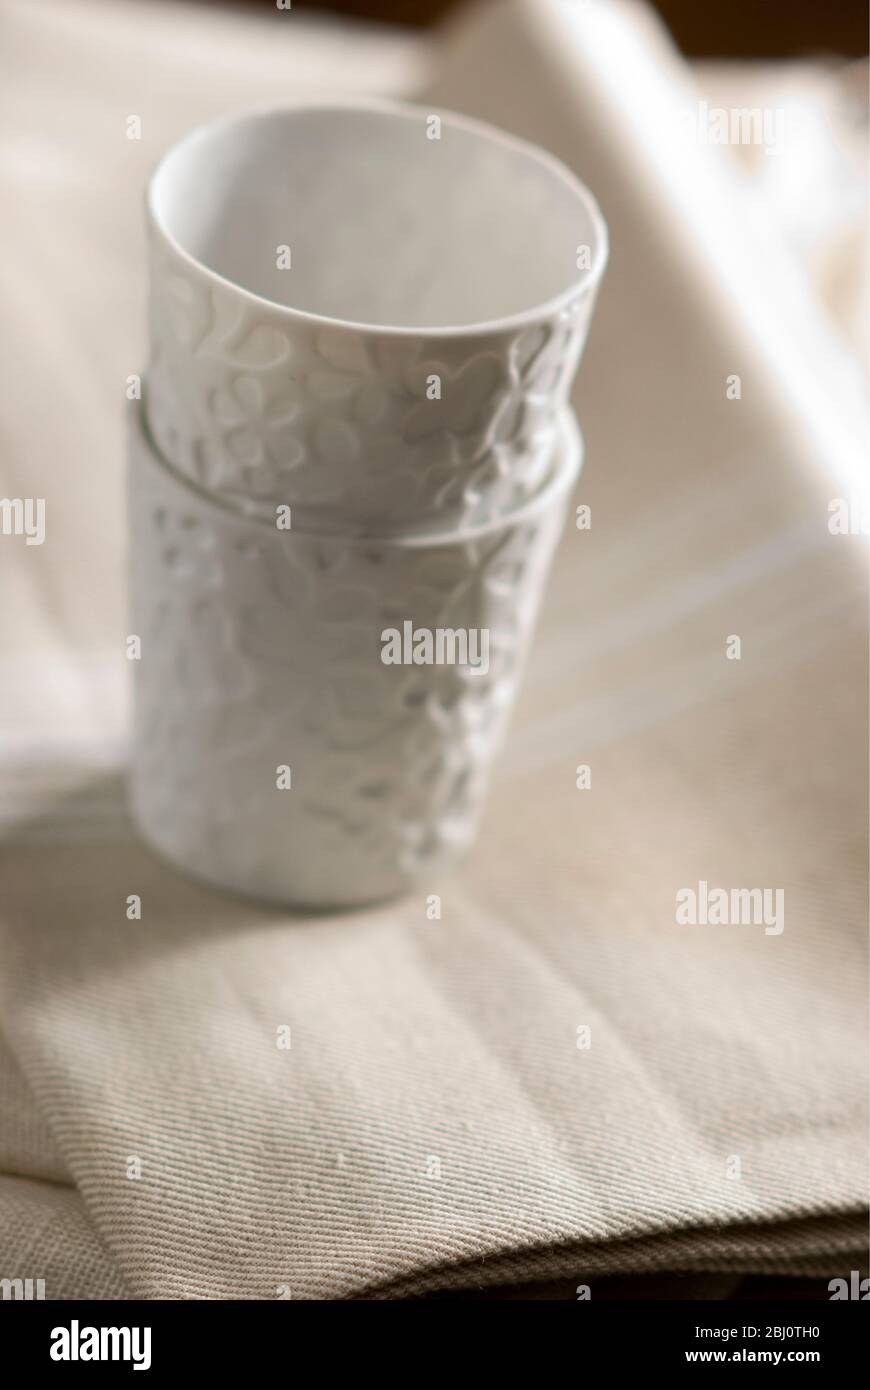 Vasos de porcelana blanca o soportes de luz para té apilados en tela de lino crema - Foto de stock